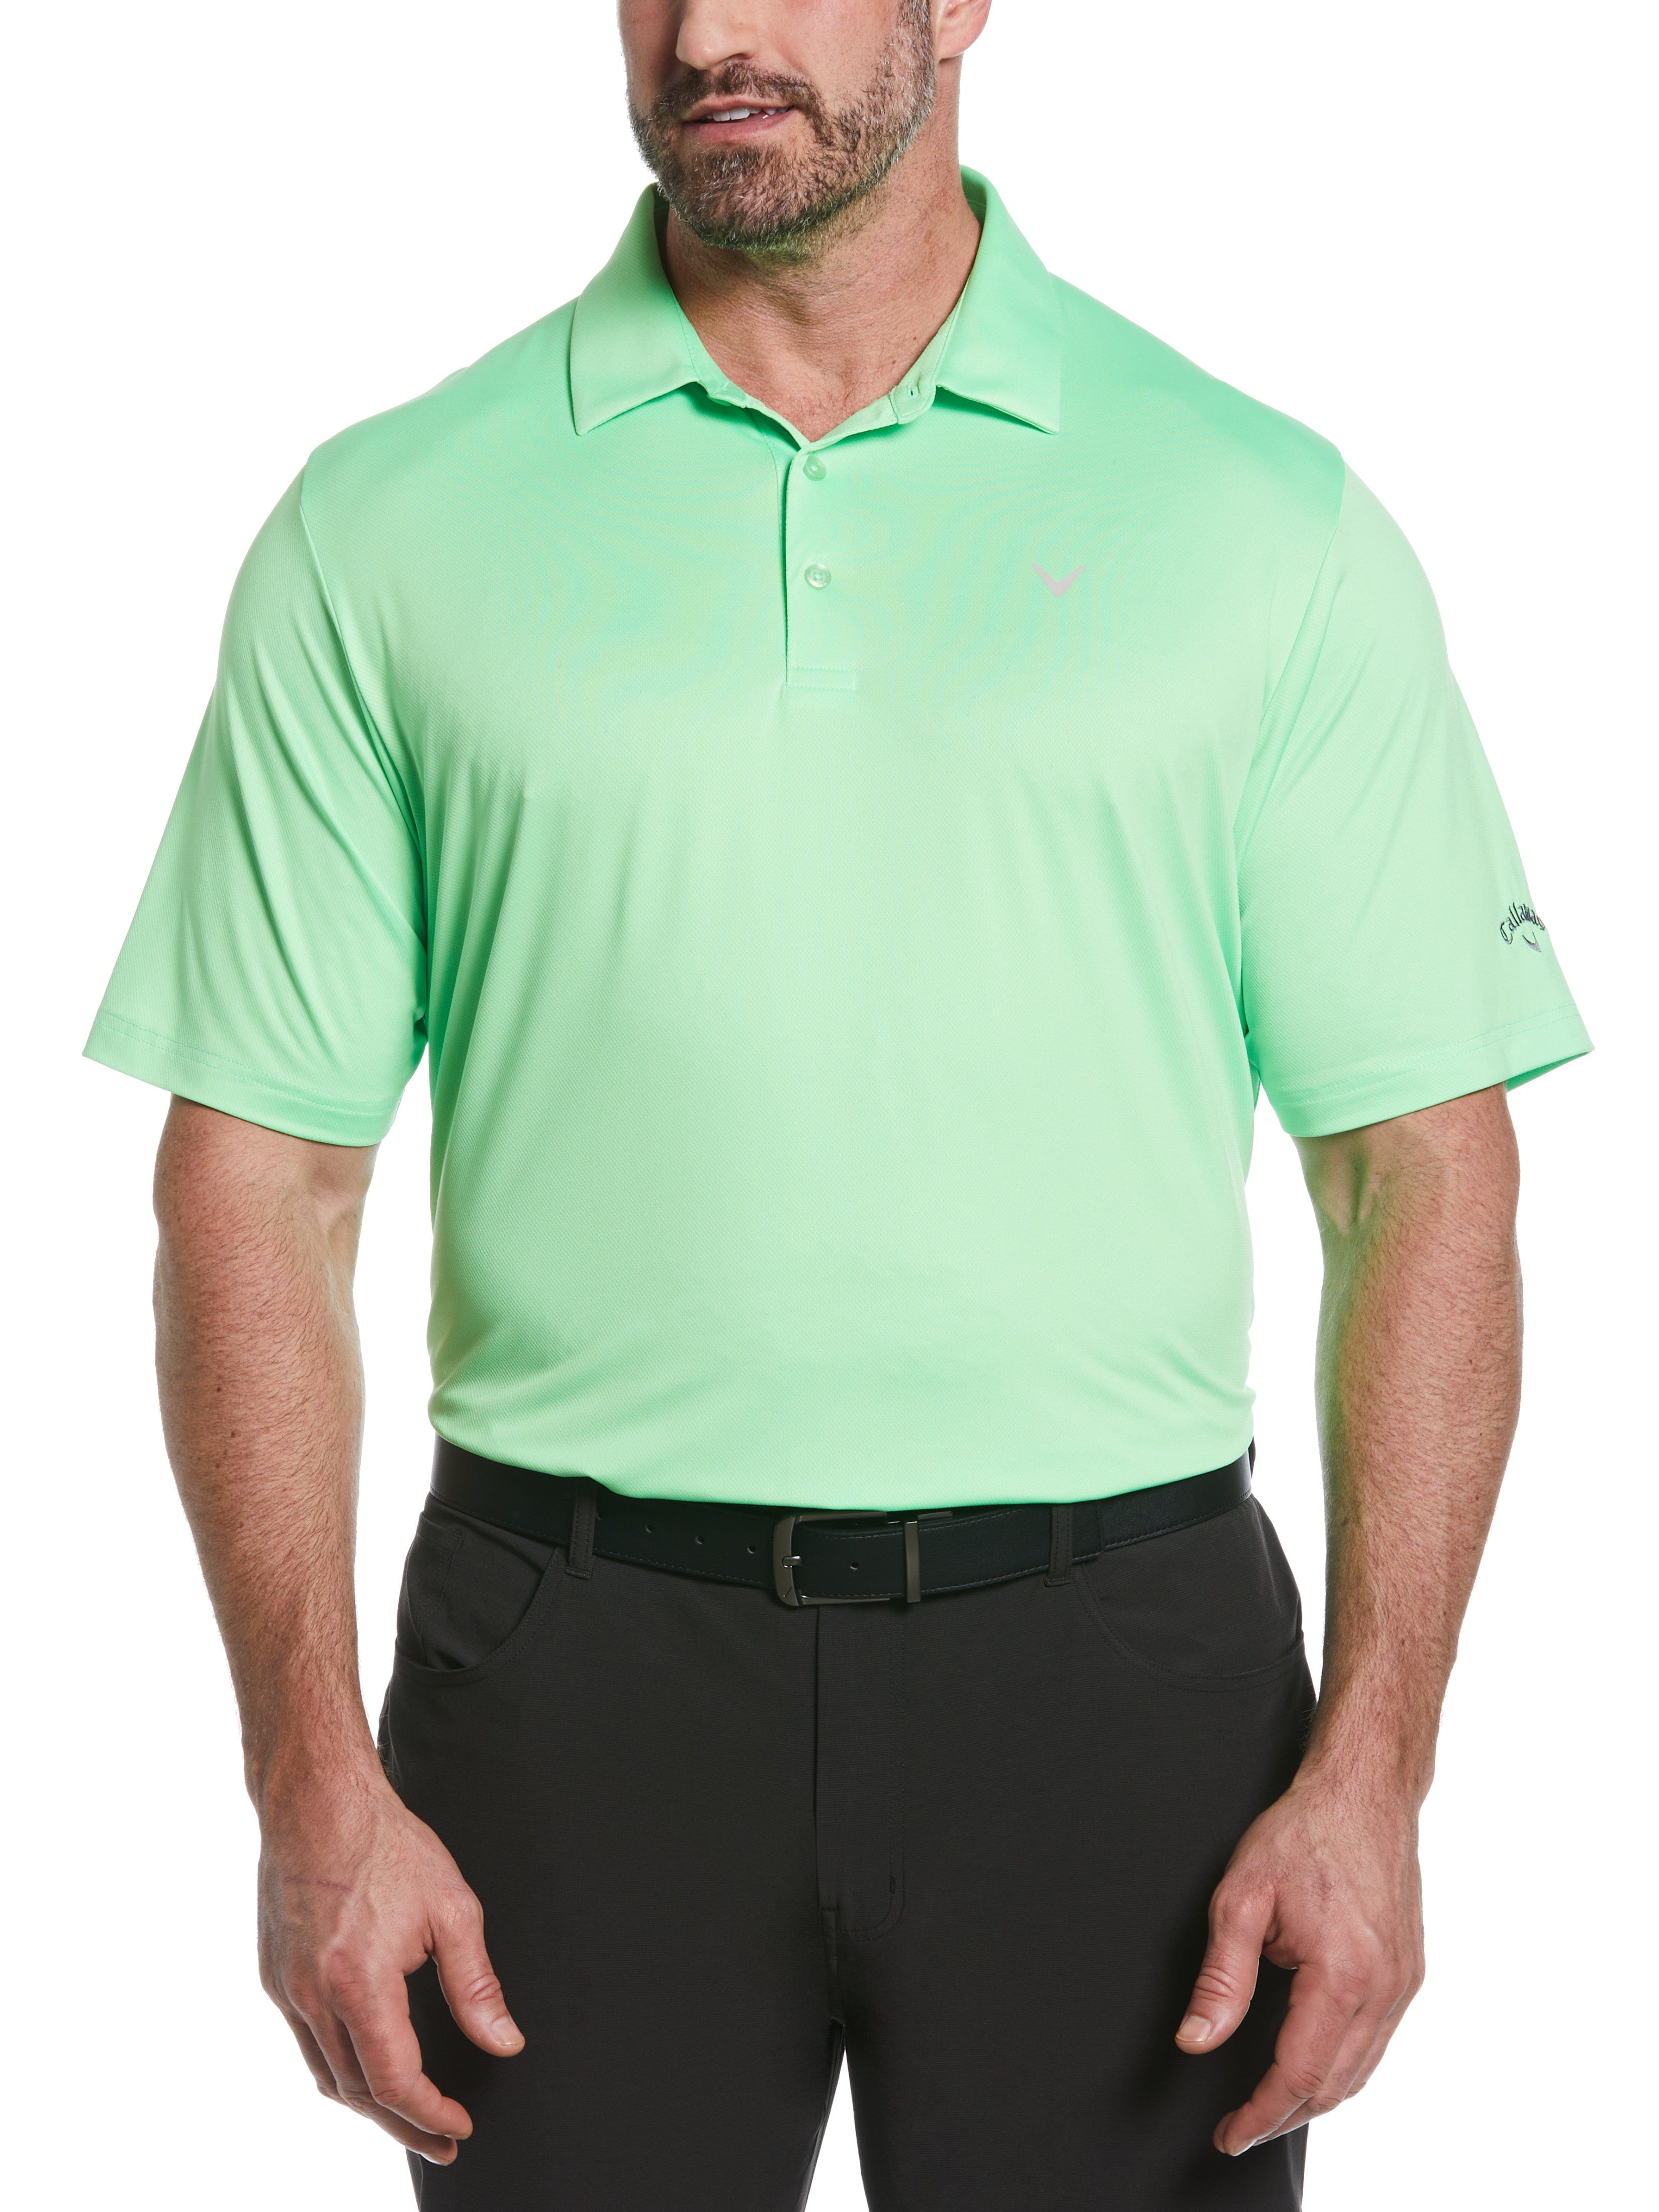 Callaway Apparel Mens Big & Tall Solid Swing Tech Golf Polo Shirt, Size 1X, Summer Green, Polyester/Elastane | Golf Apparel Shop